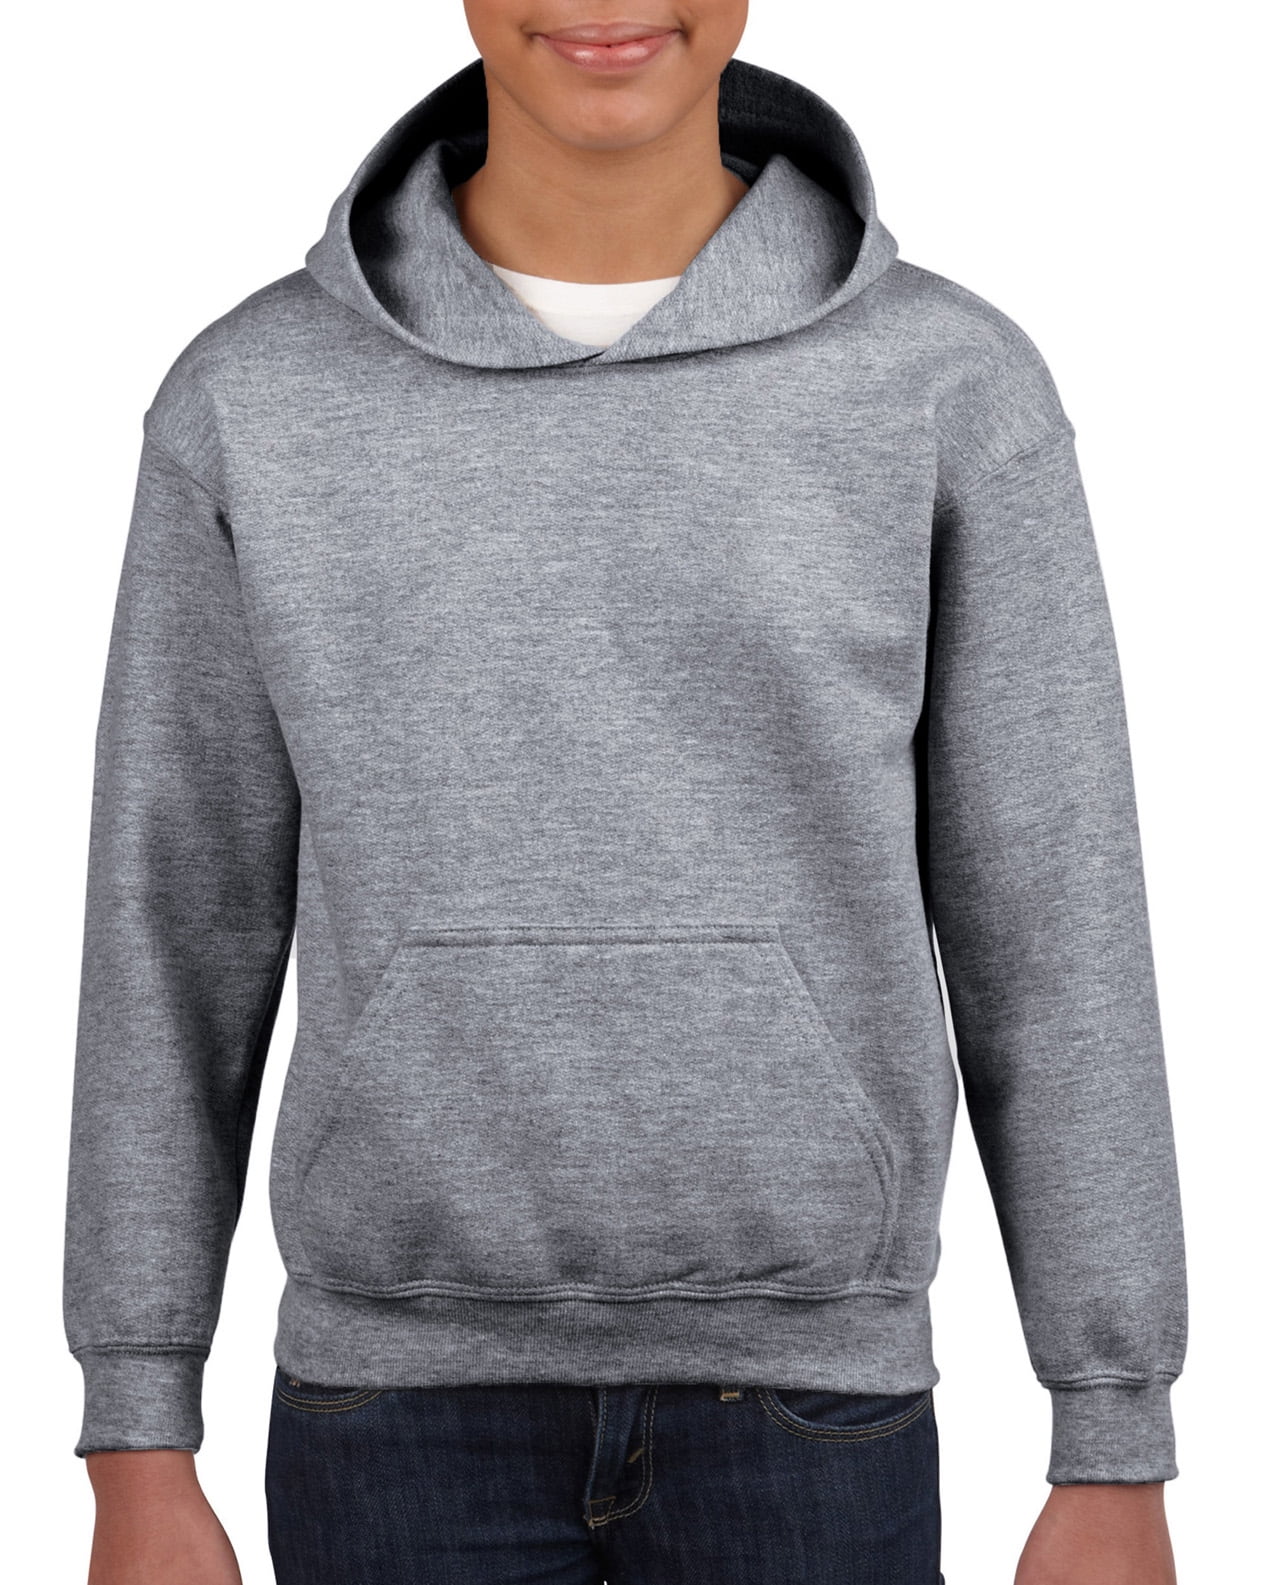 Shedd Shirts Navy Hair Logo Hooded Sweatshirt Youth Medium